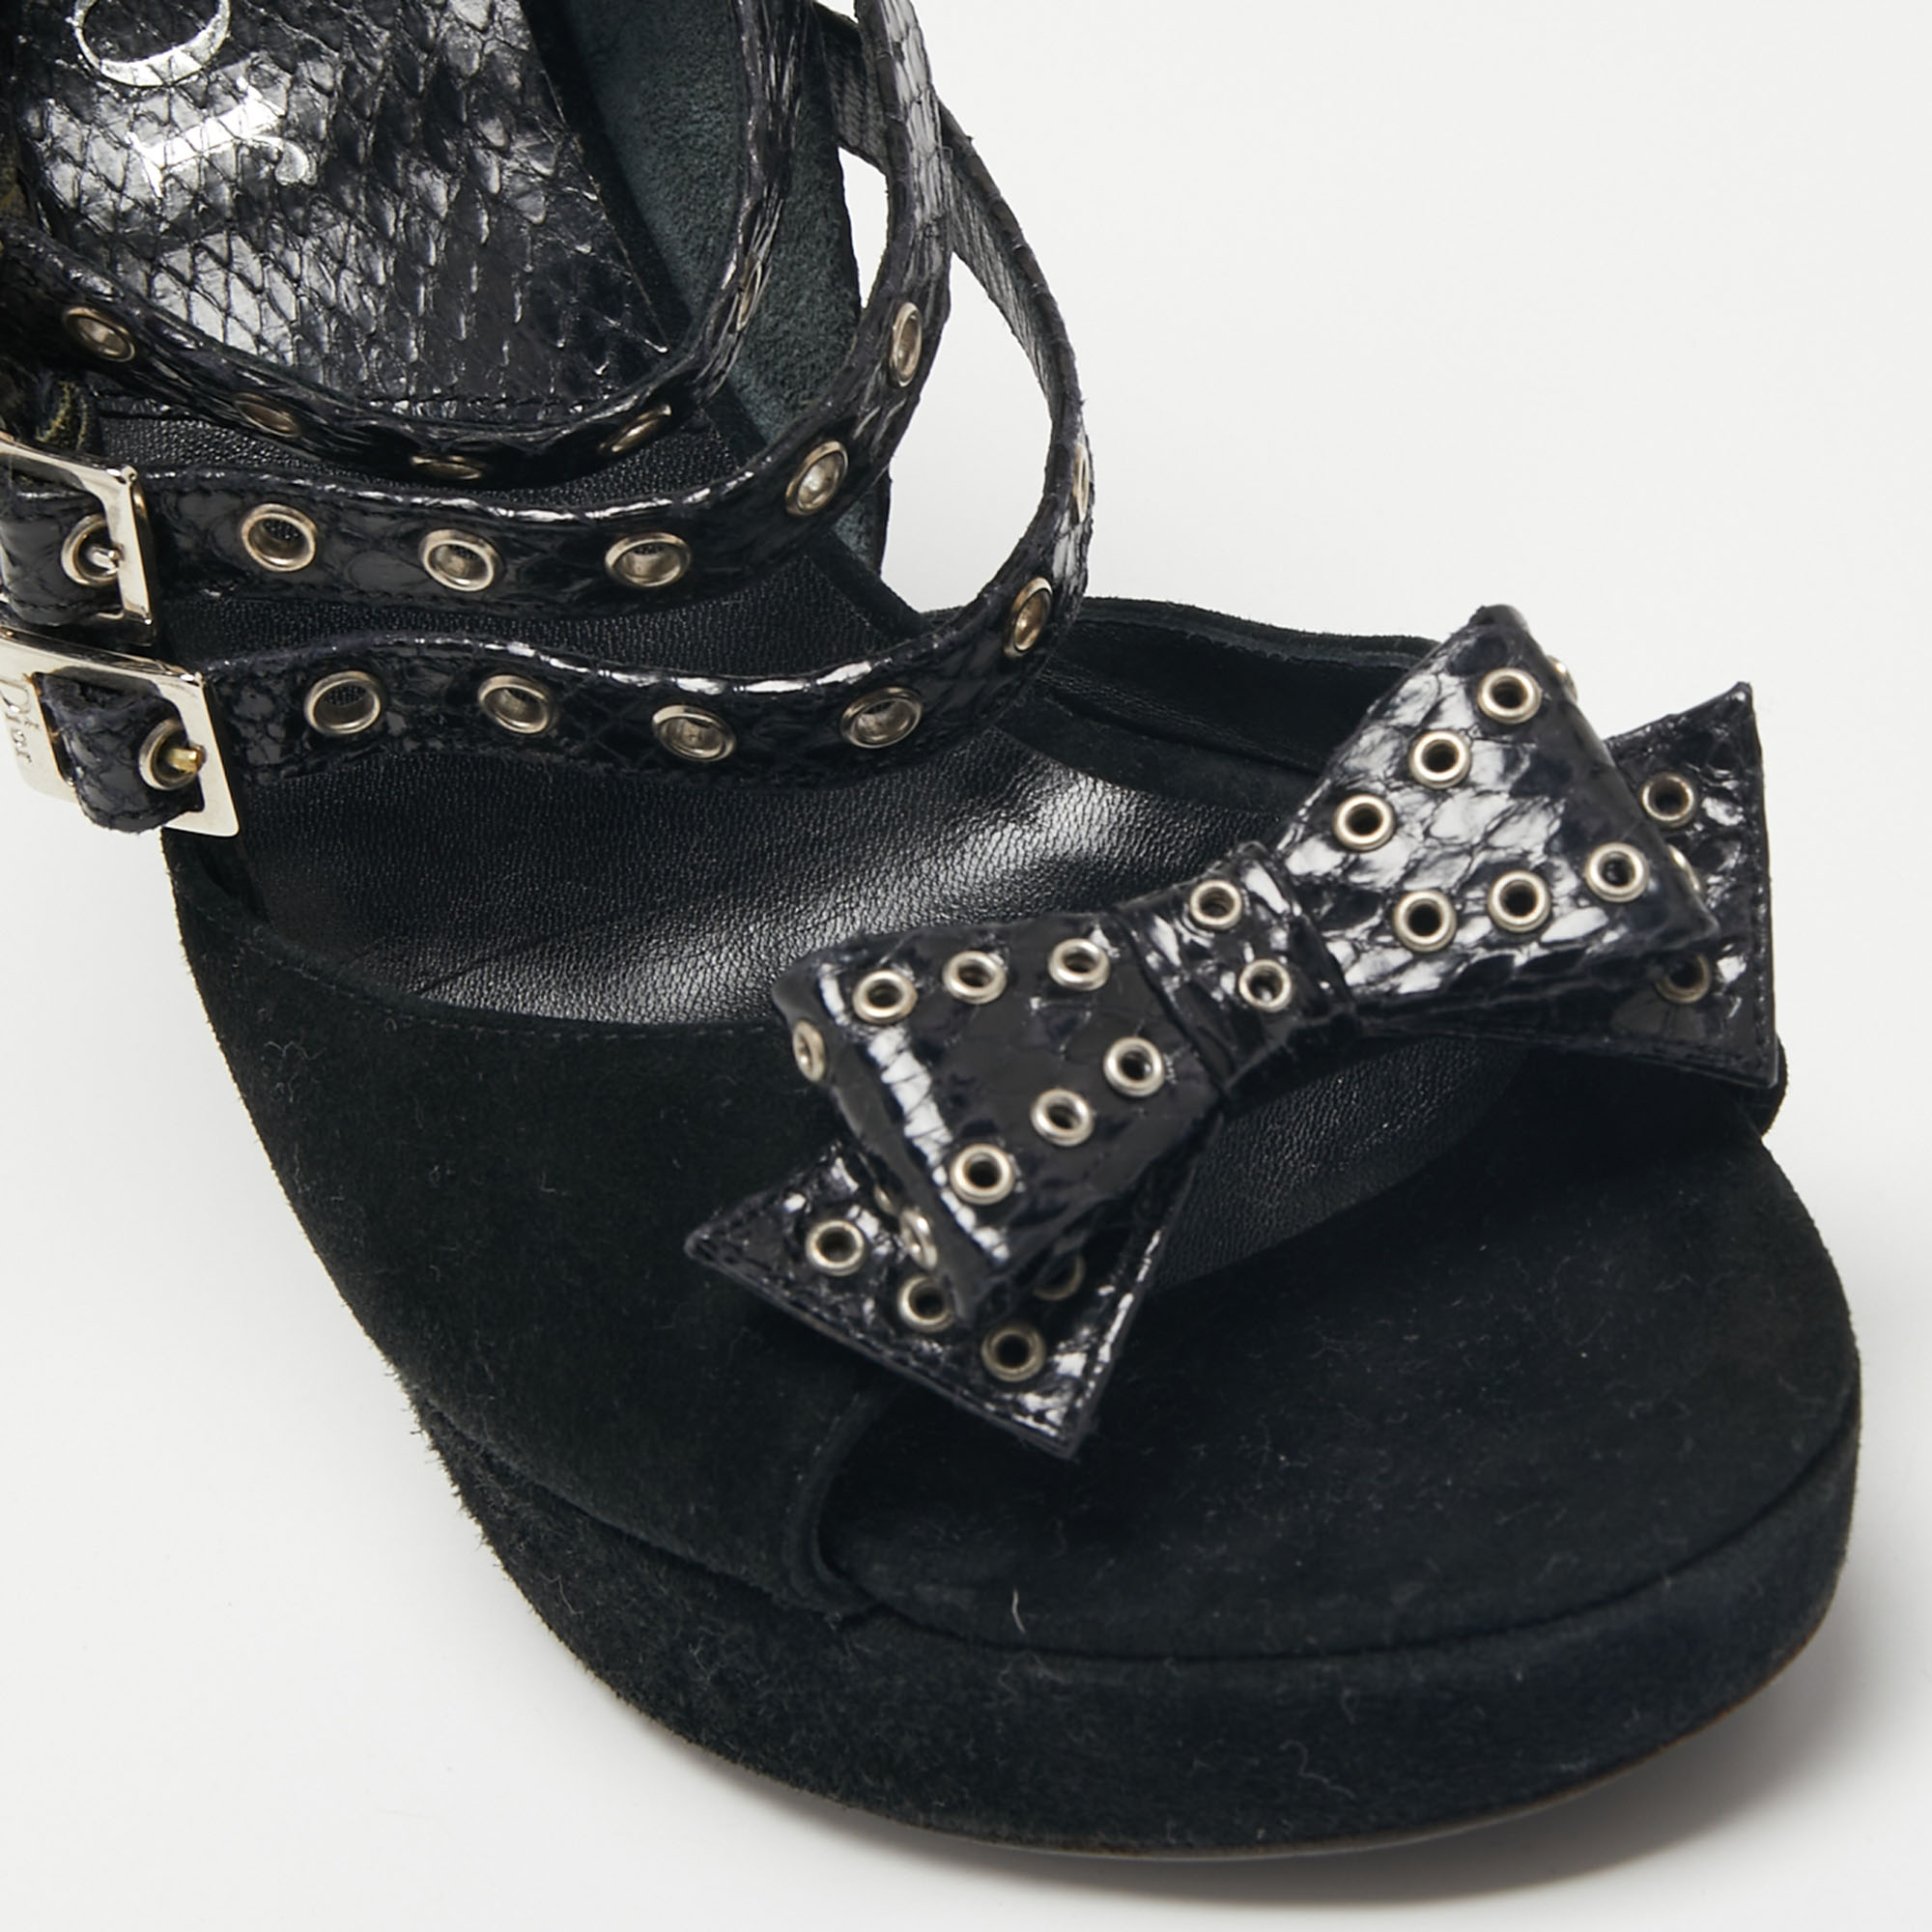 Dior Black Snakeskin And Suede Strappy Eyelet Bow Platform Sandals Size 38.5